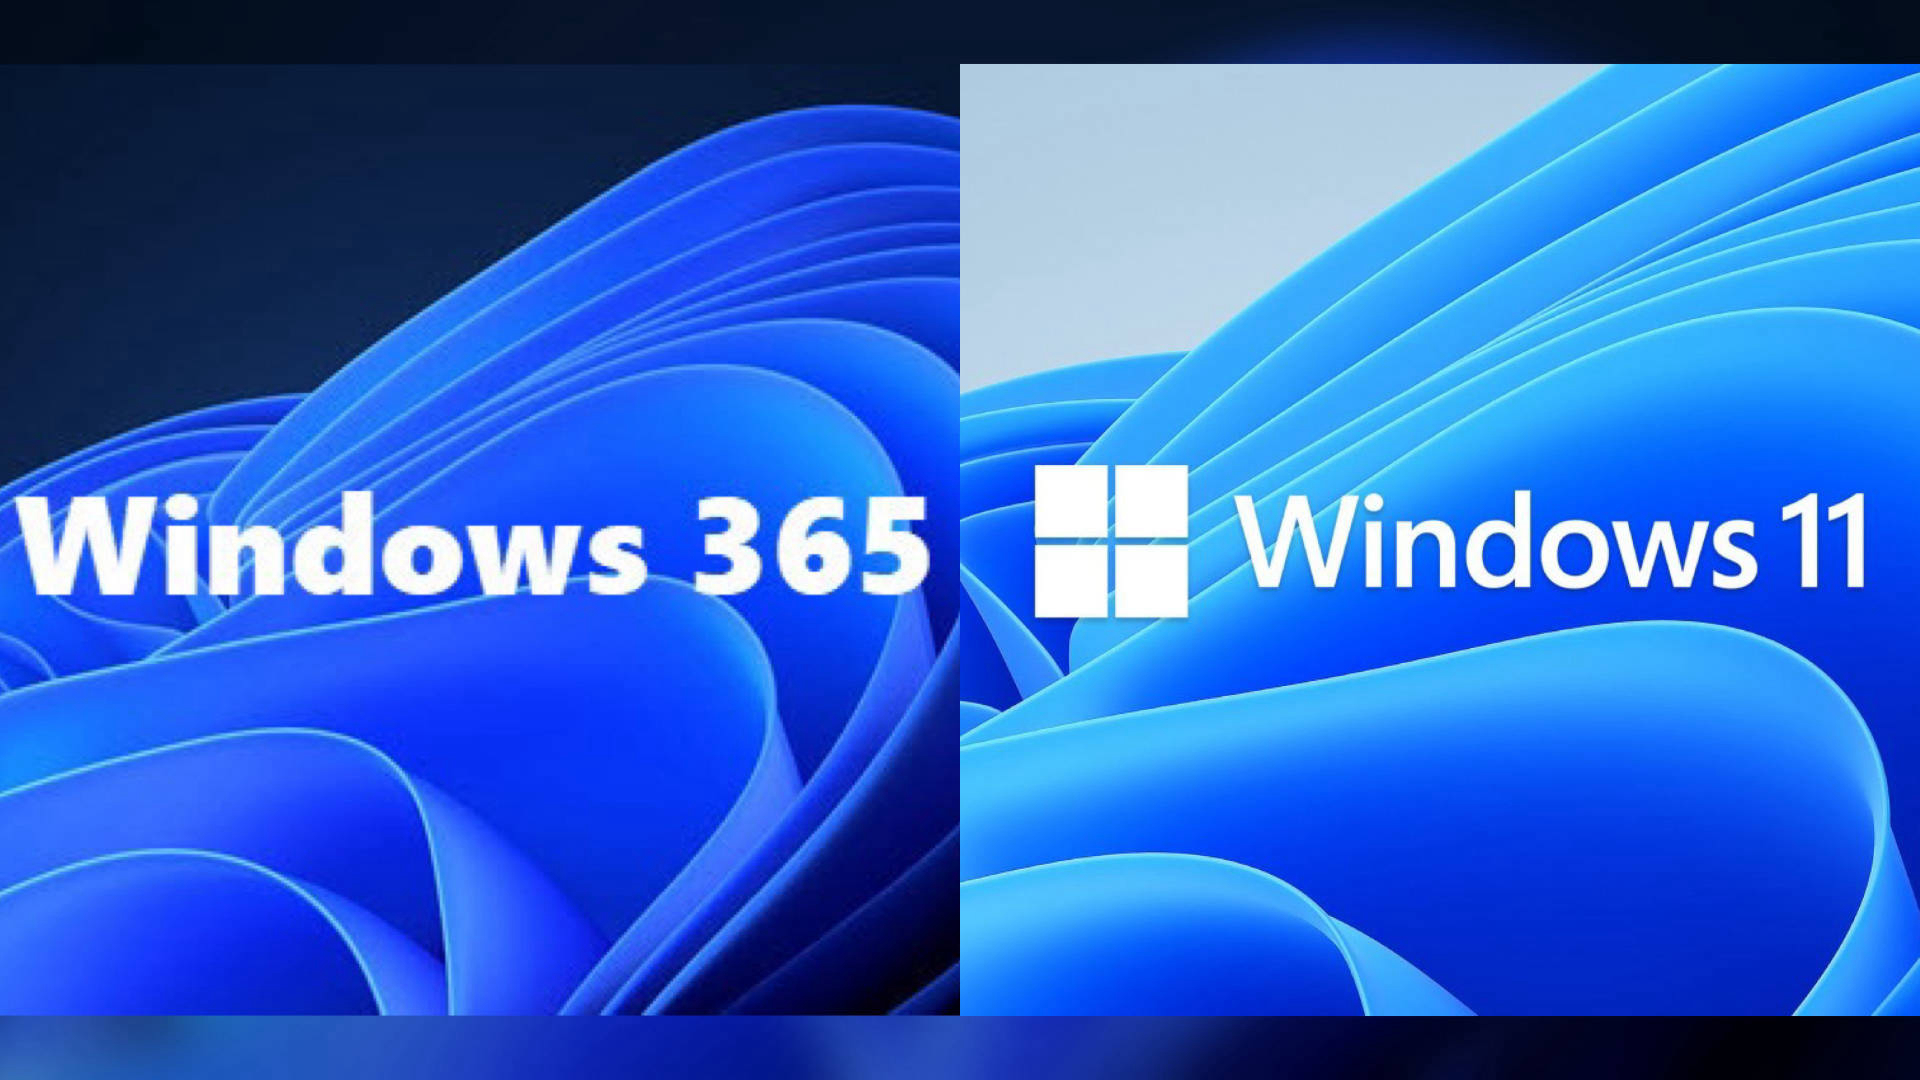 Windows 365 vs Windows 11